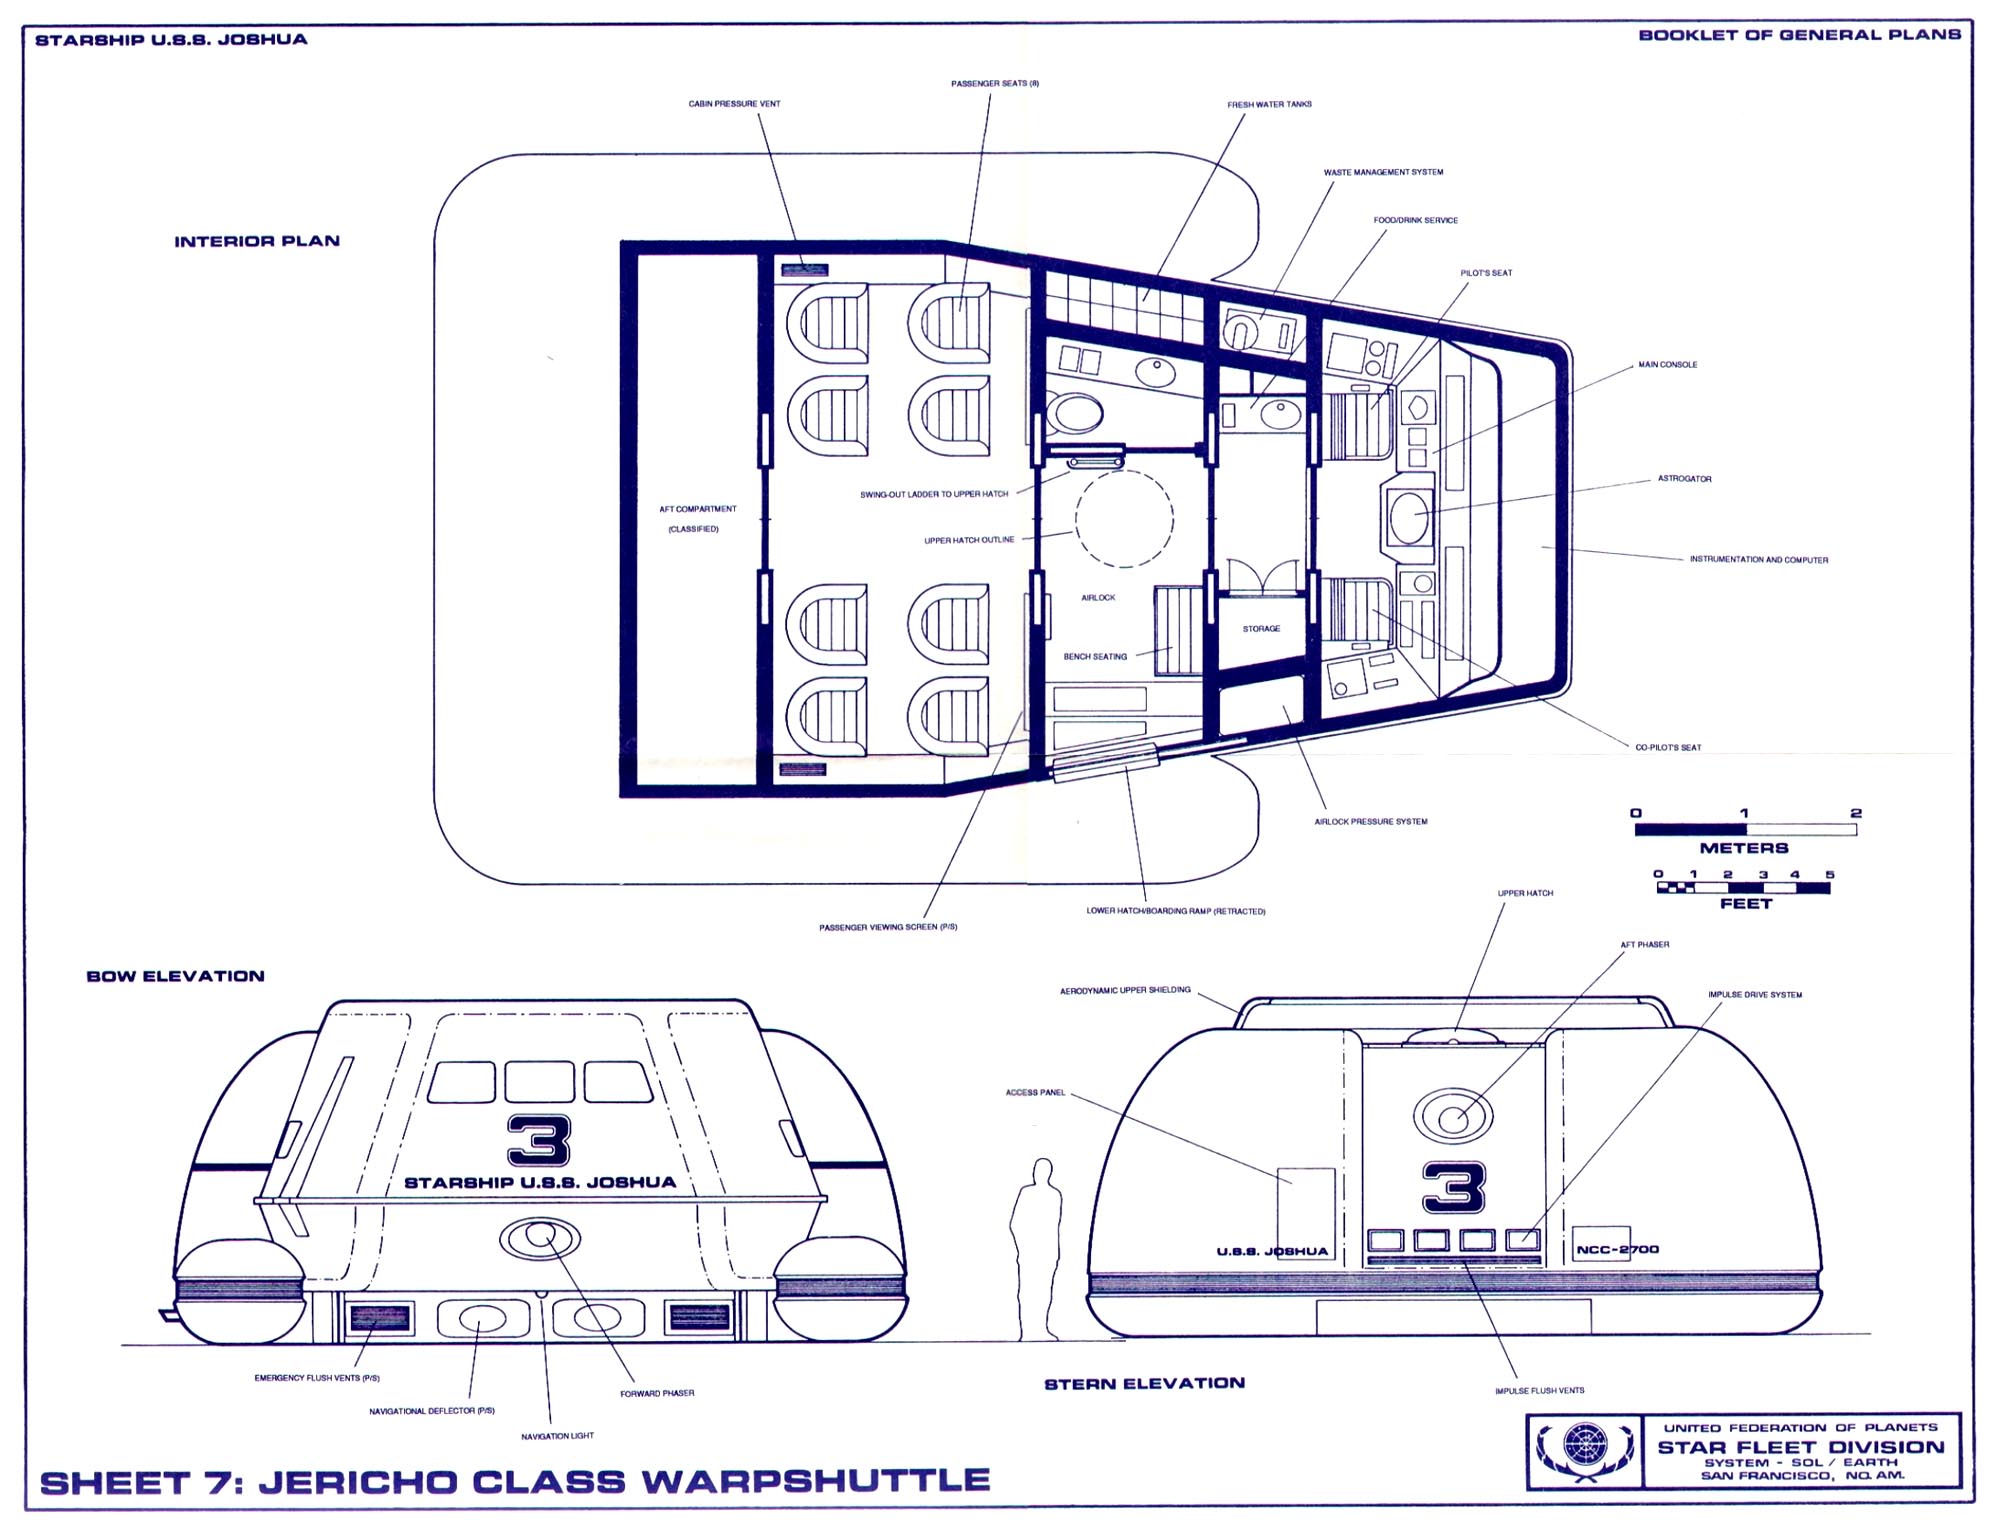 http://www.cygnus-x1.net/links/lcars/blueprints/joshua-class-starship-sheet-7.jpg